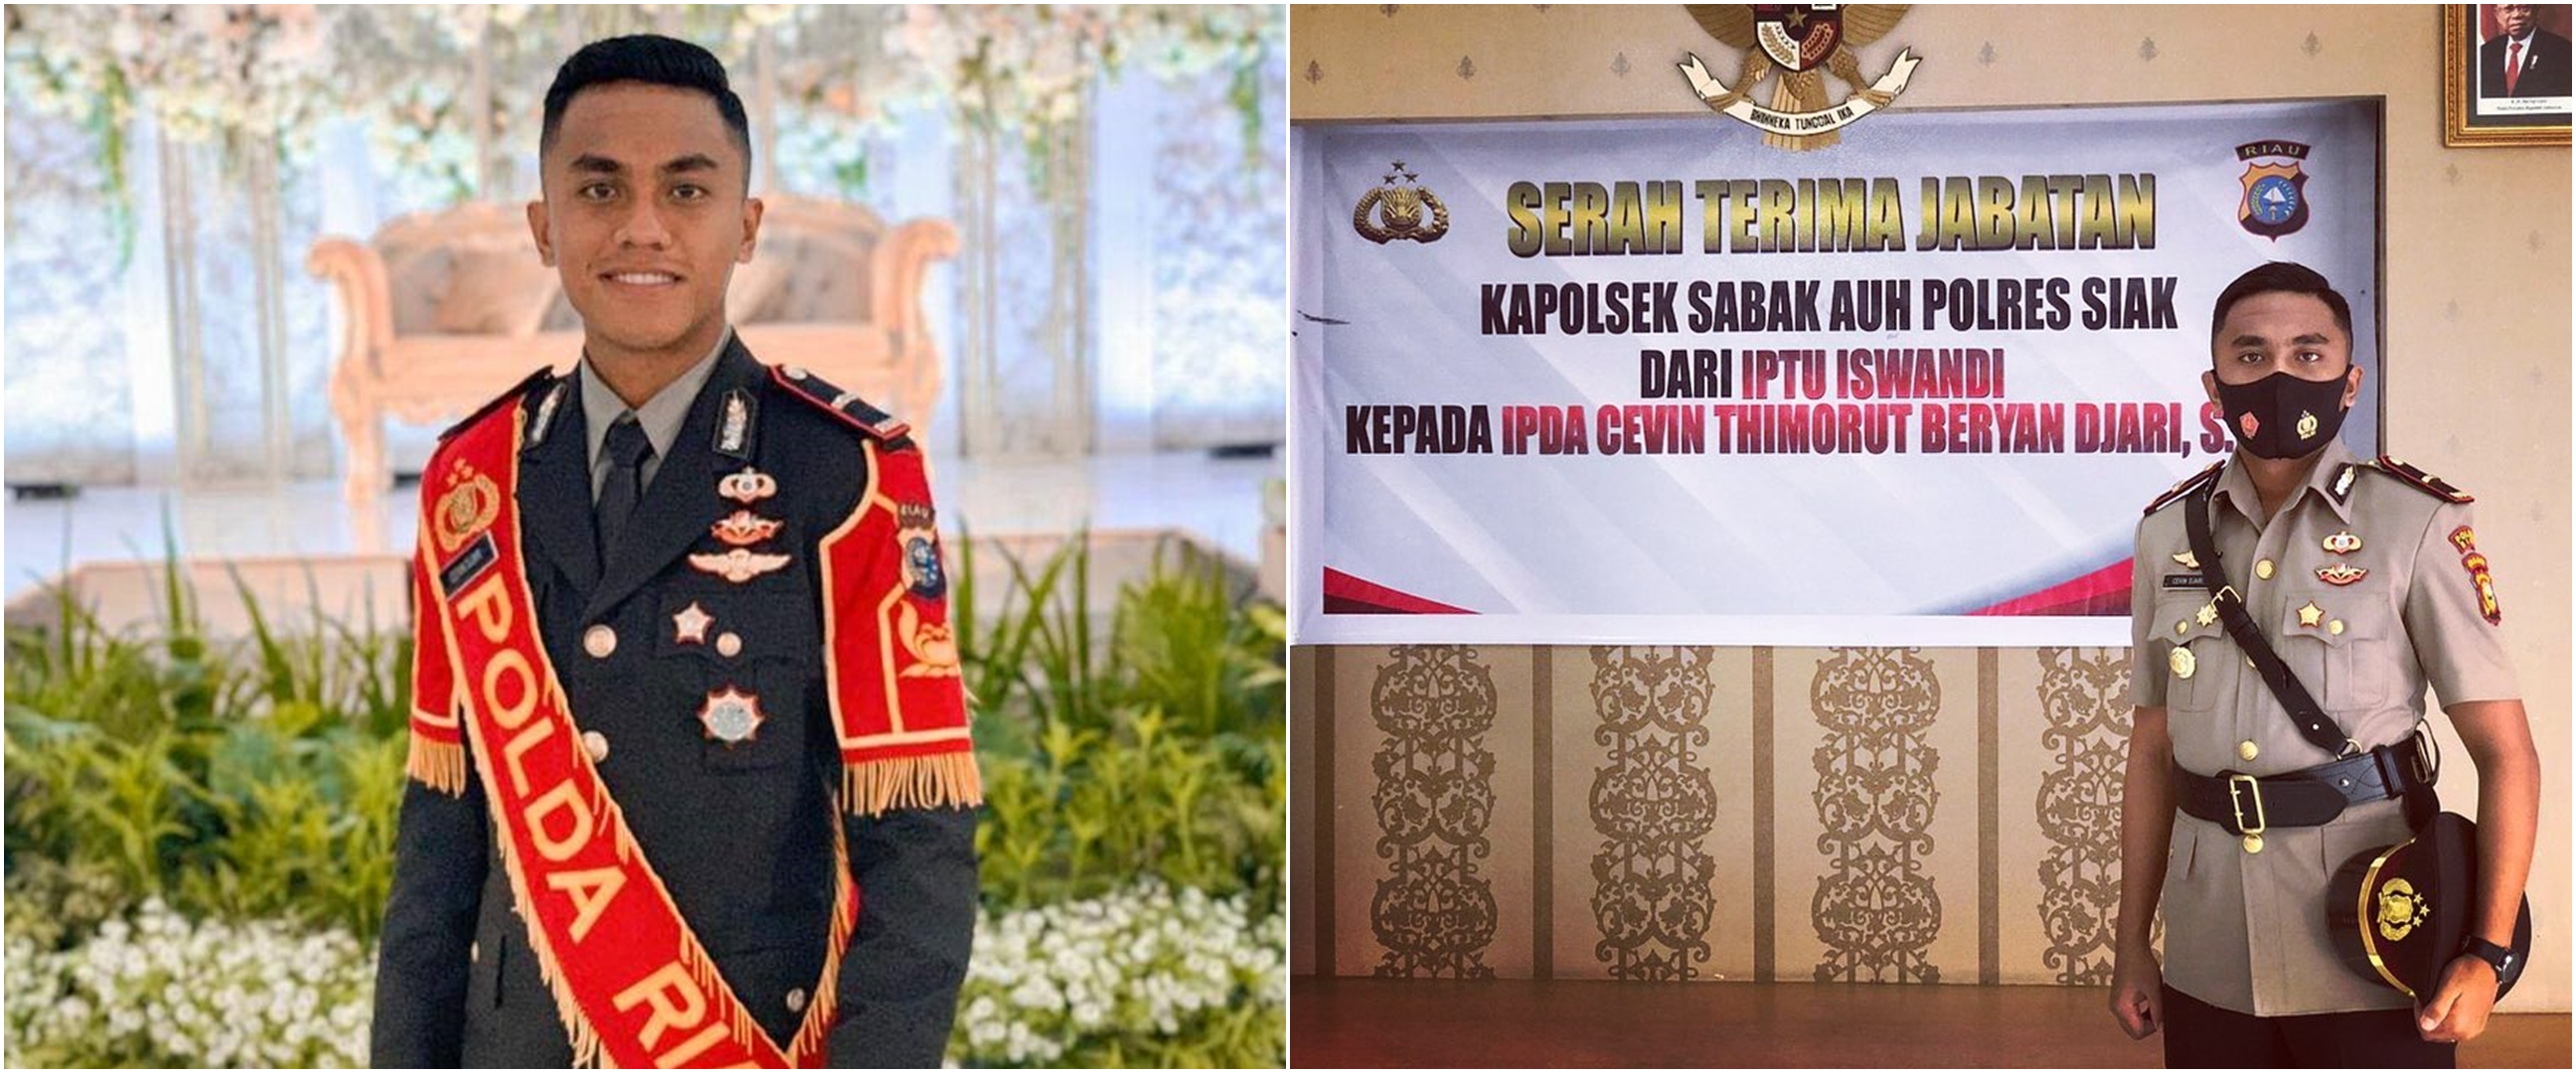 8 Potret Ipda Cevin Thimorut, kapolsek termuda di Indonesia yang viral